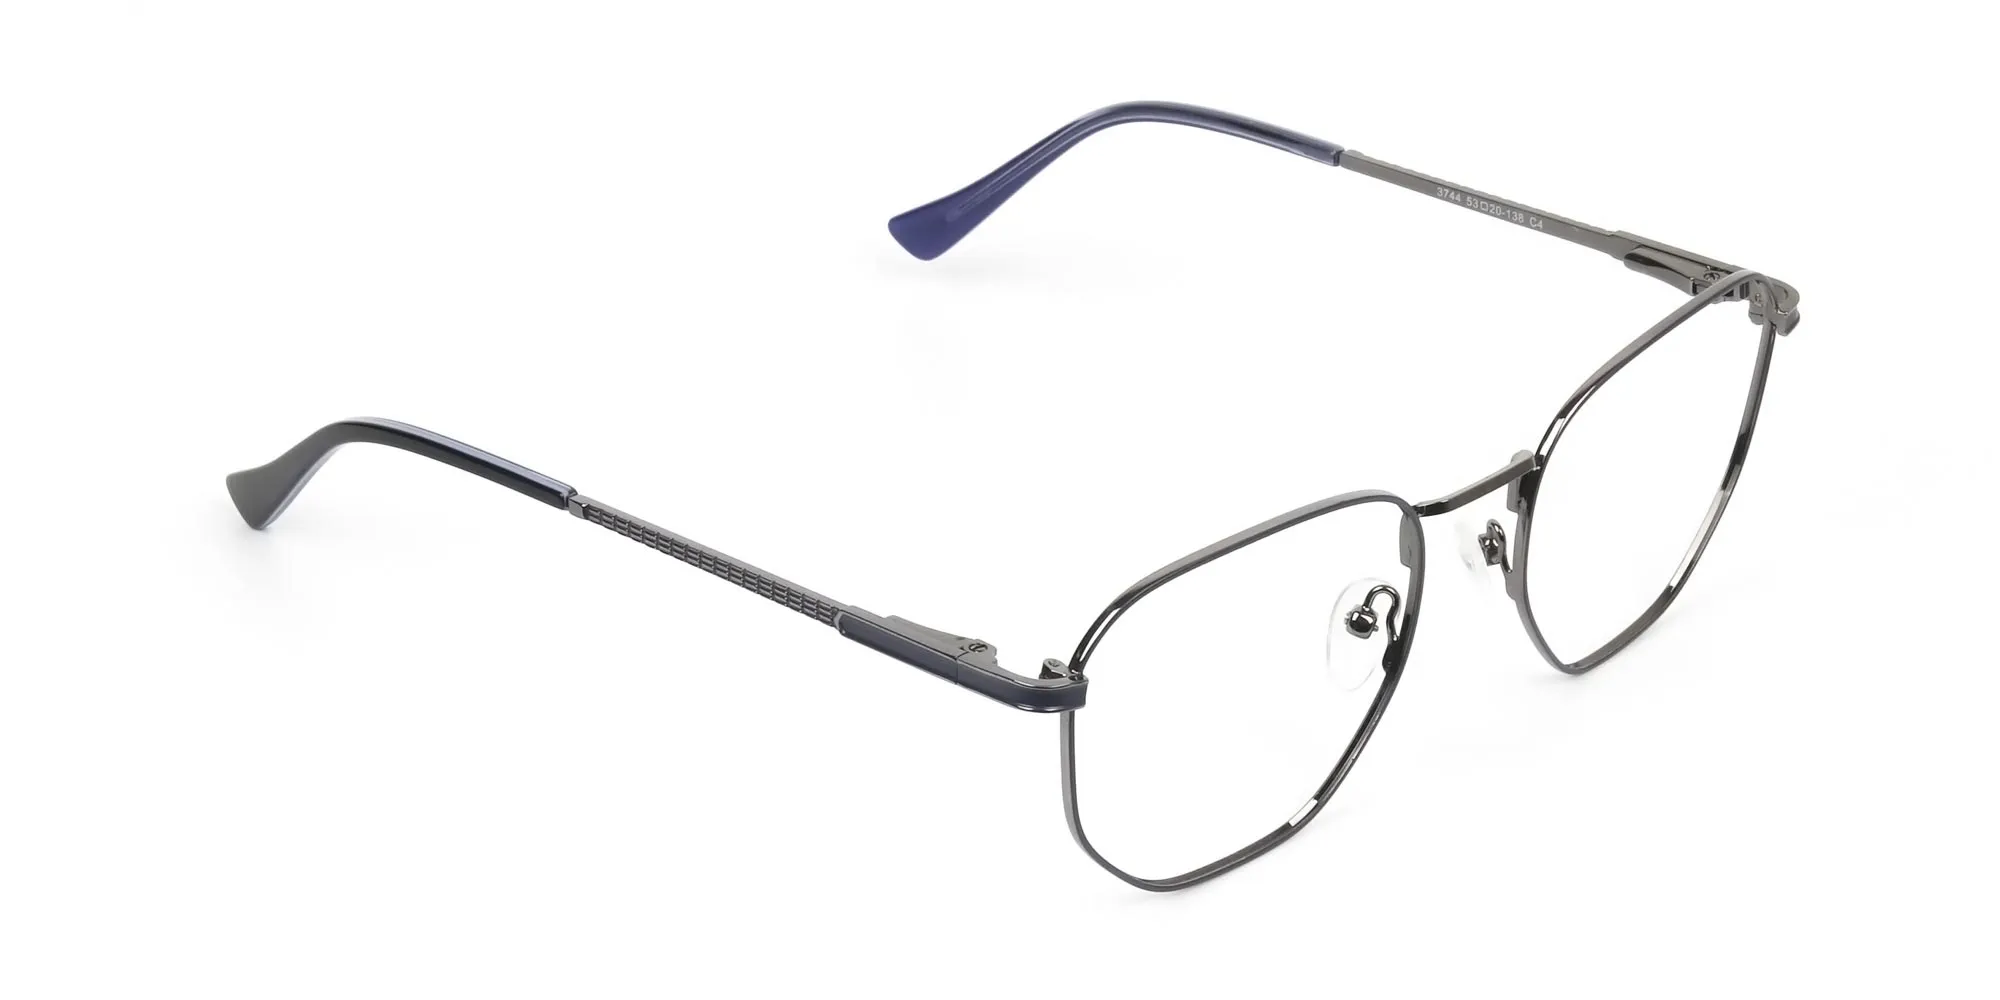 Lightweight Silver & Blue Geometric Glasses - 2